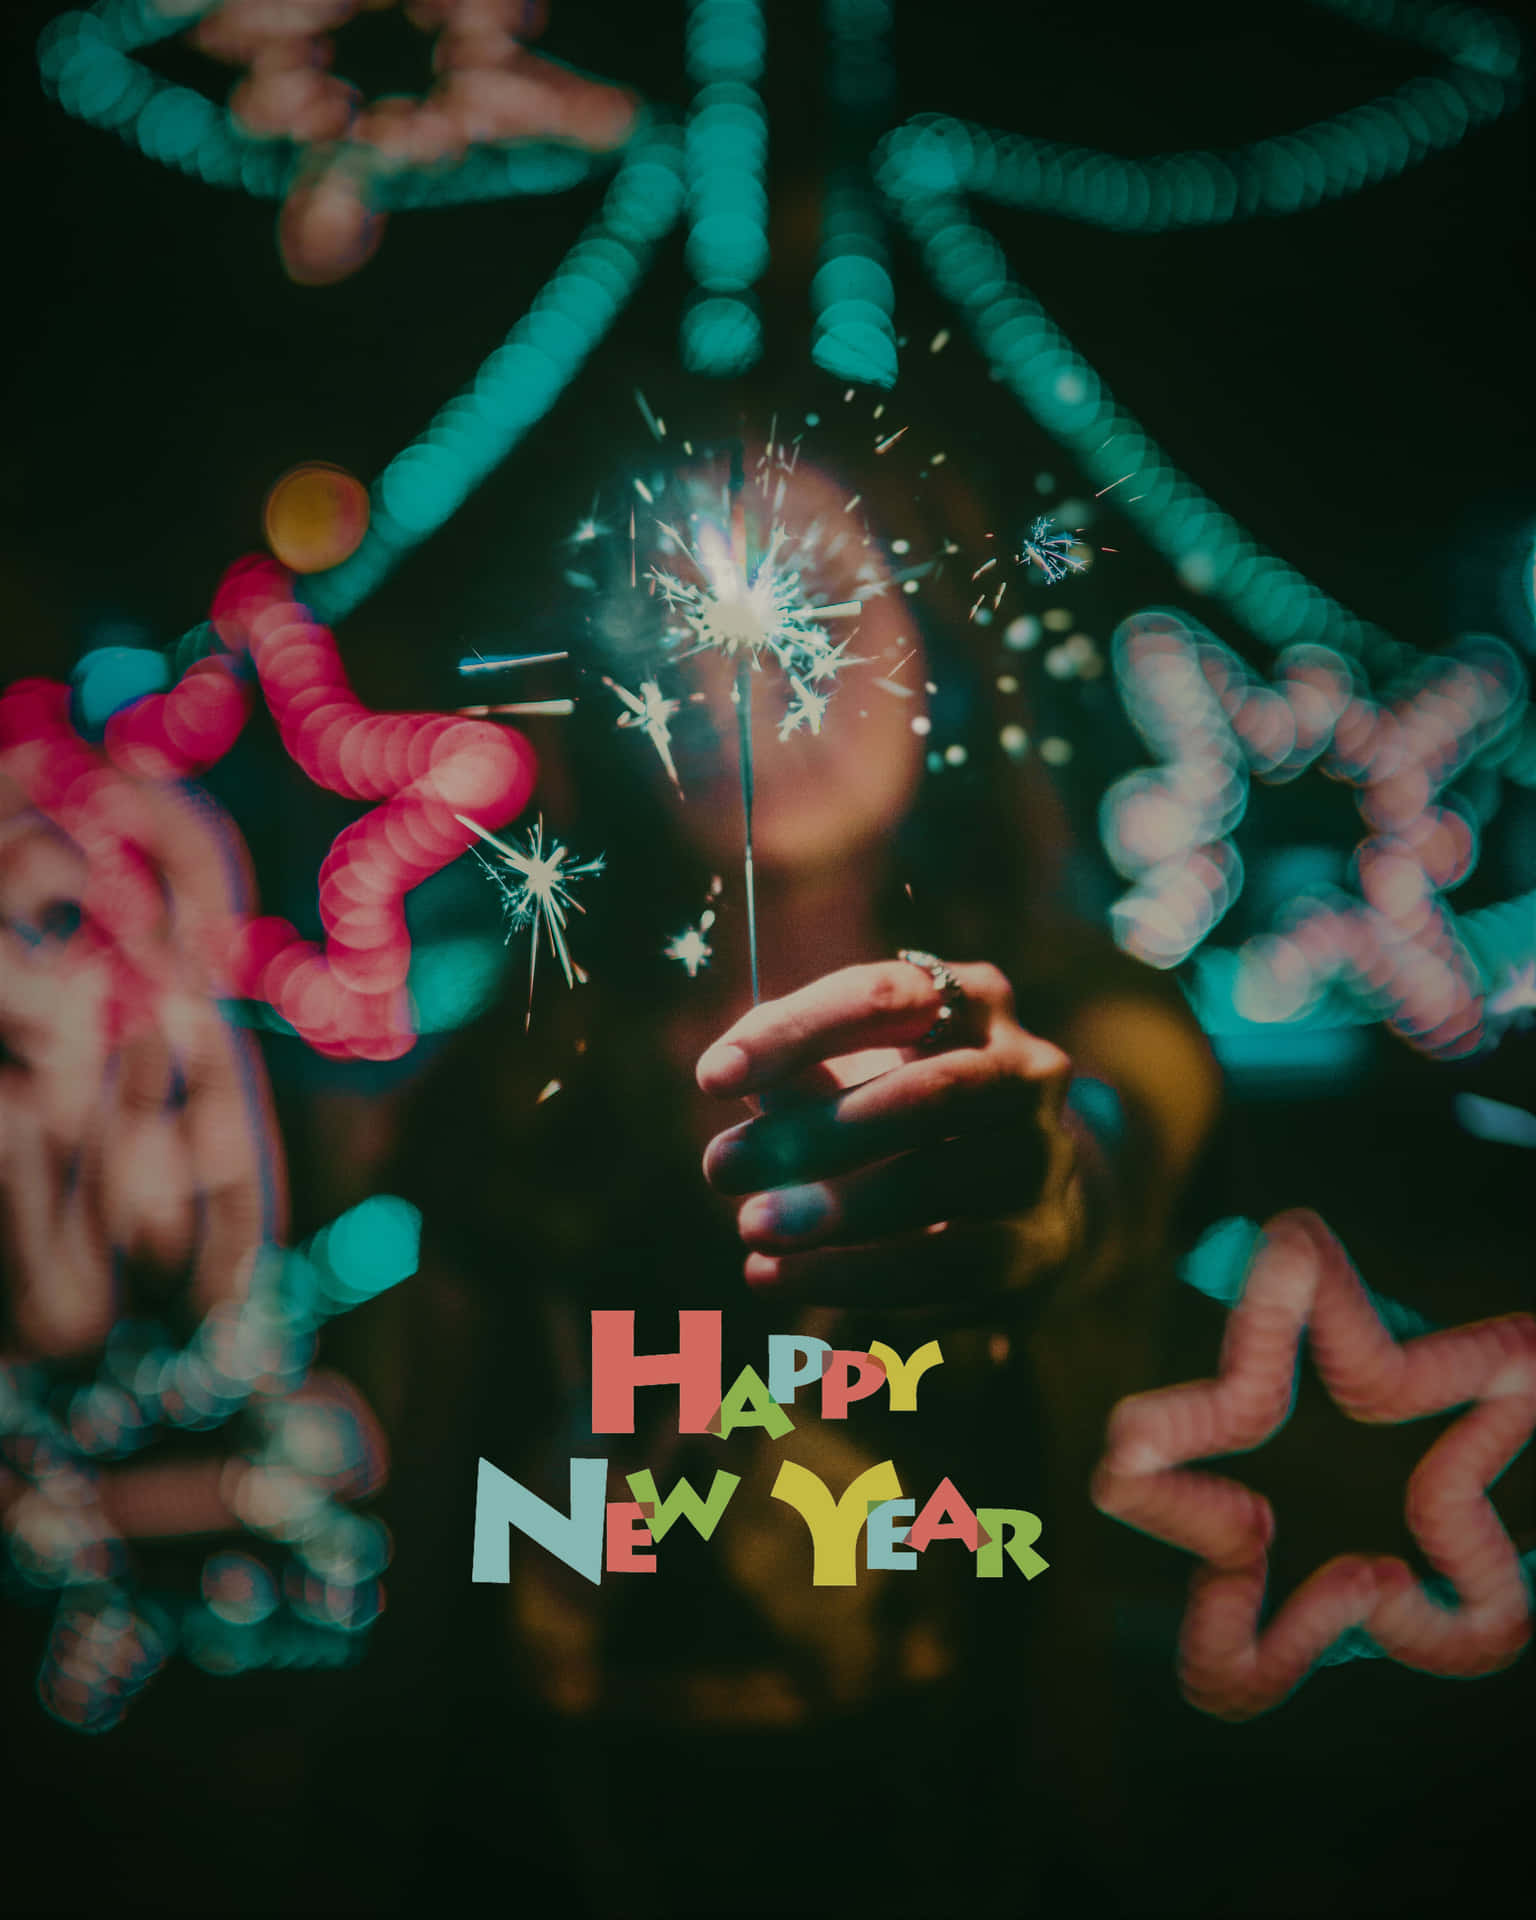 Celebrating New Year's Eve - Brilliance And Festivity